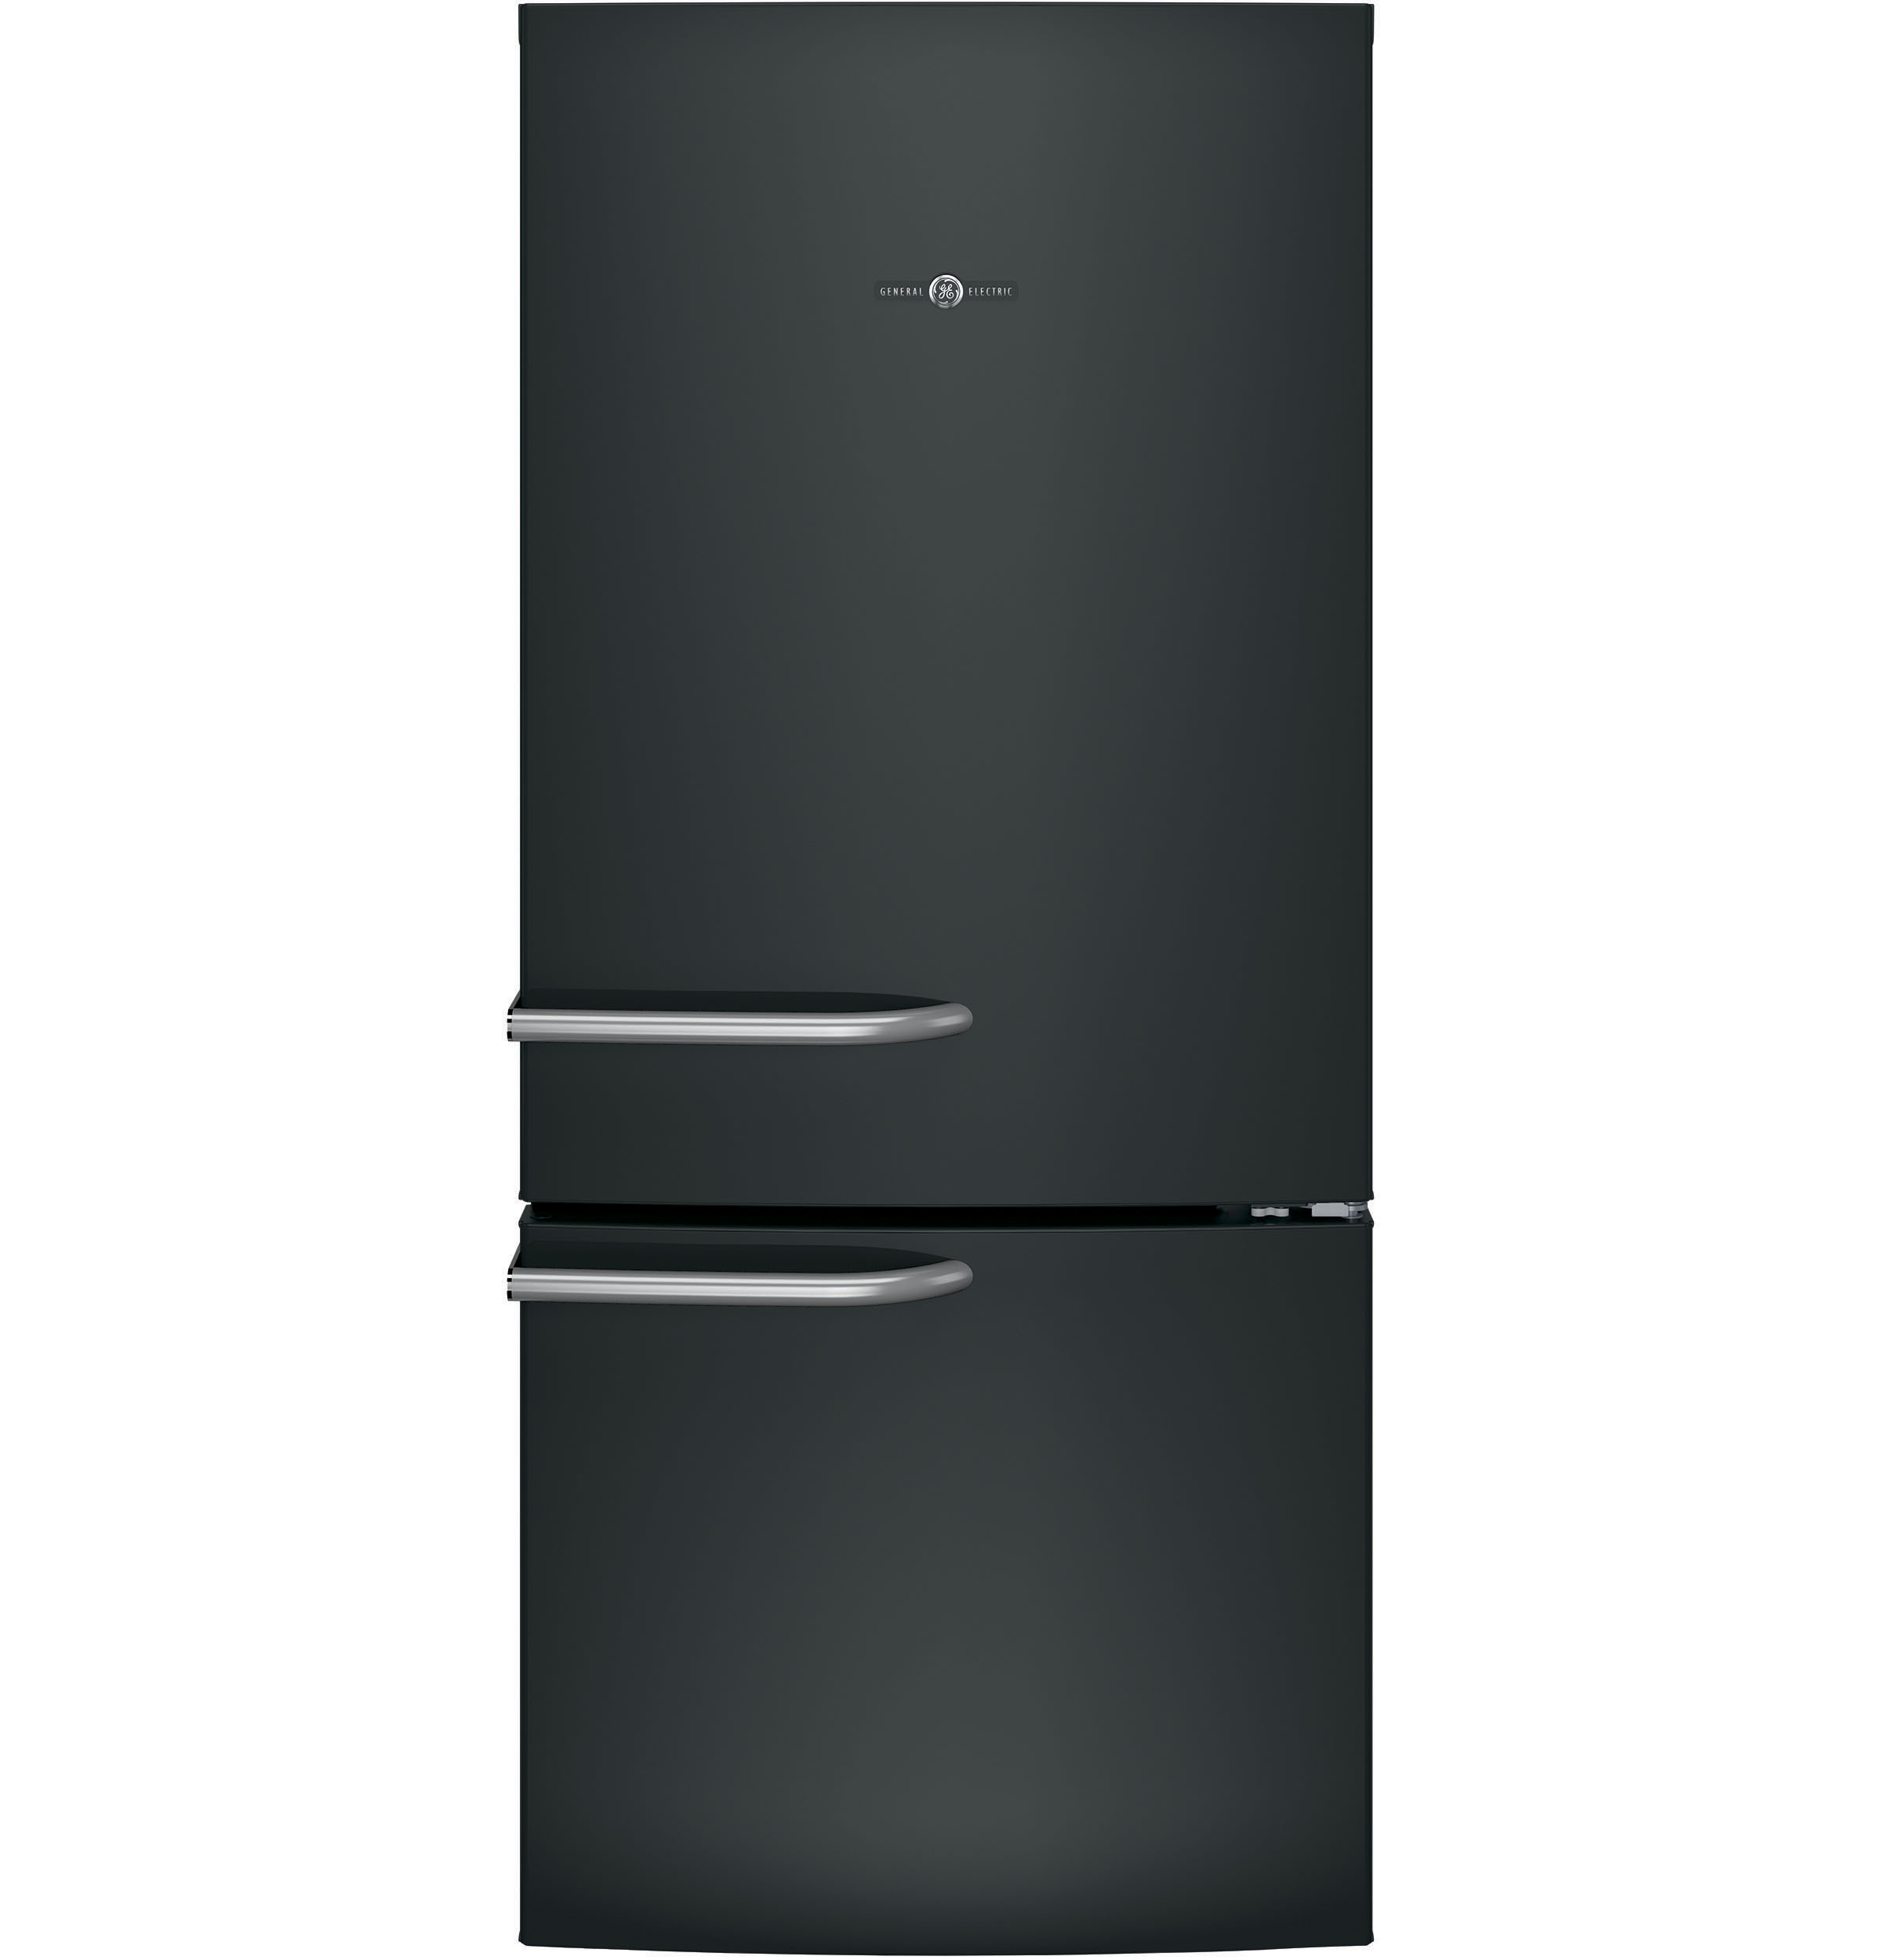 GE Artistry™ Series ENERGY STAR® 21.0 Cu. Ft. Bottom Freezer Refrigerator